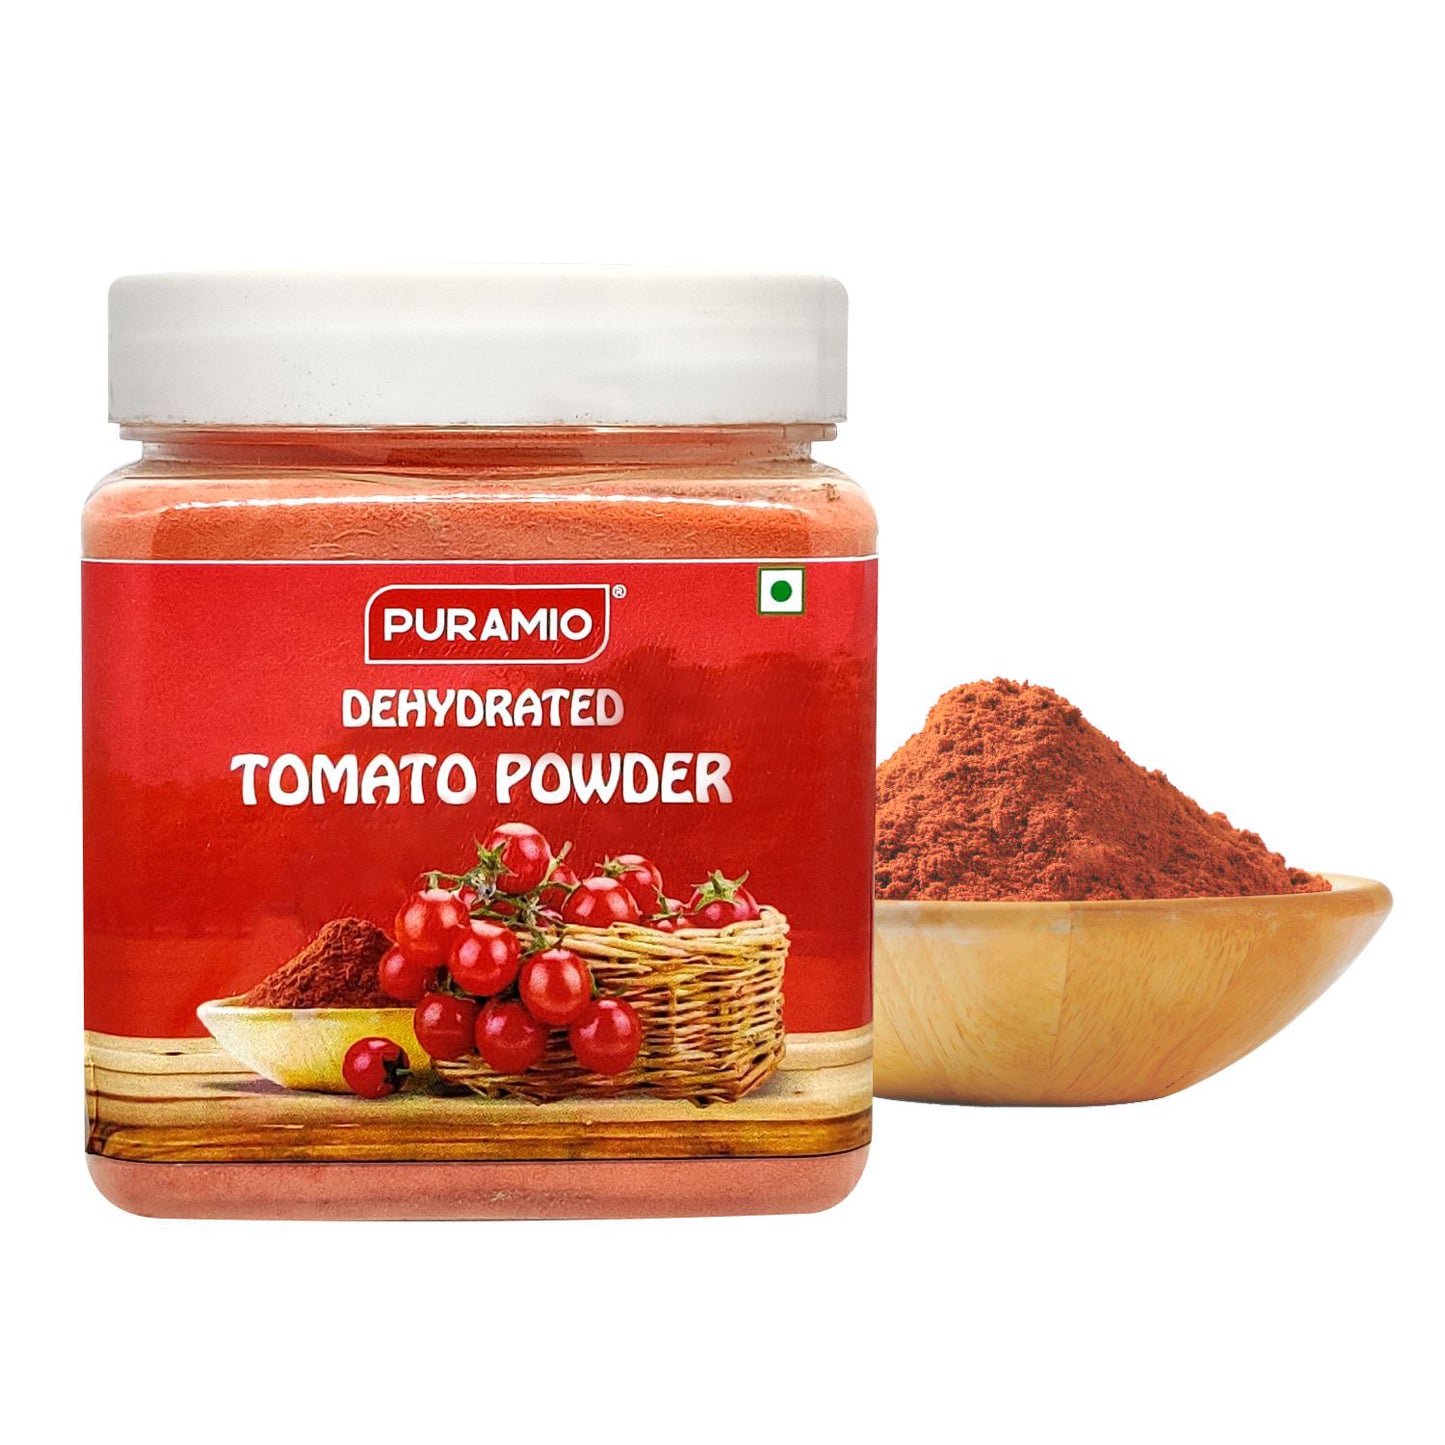 Puramio Dehydrated Tomato Powder